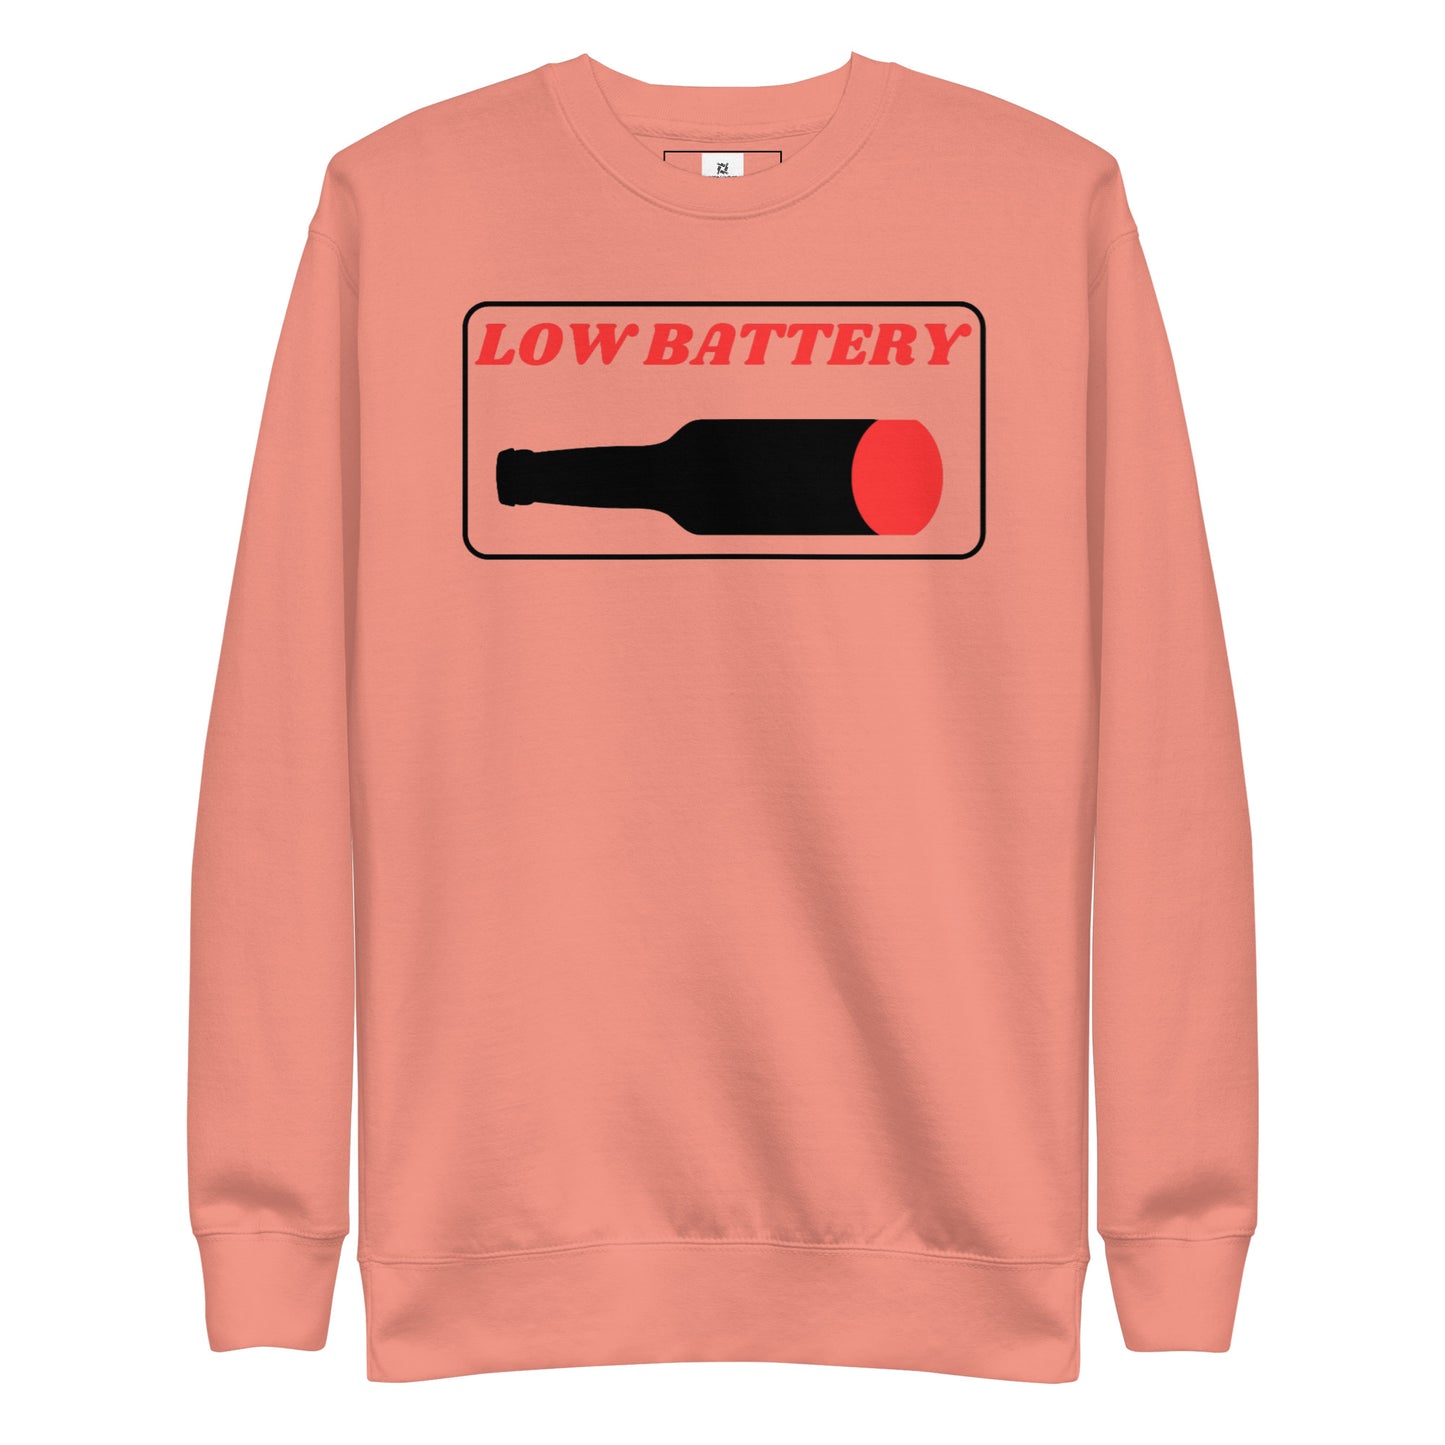 Low Battery Premium Sweatshirt - Light